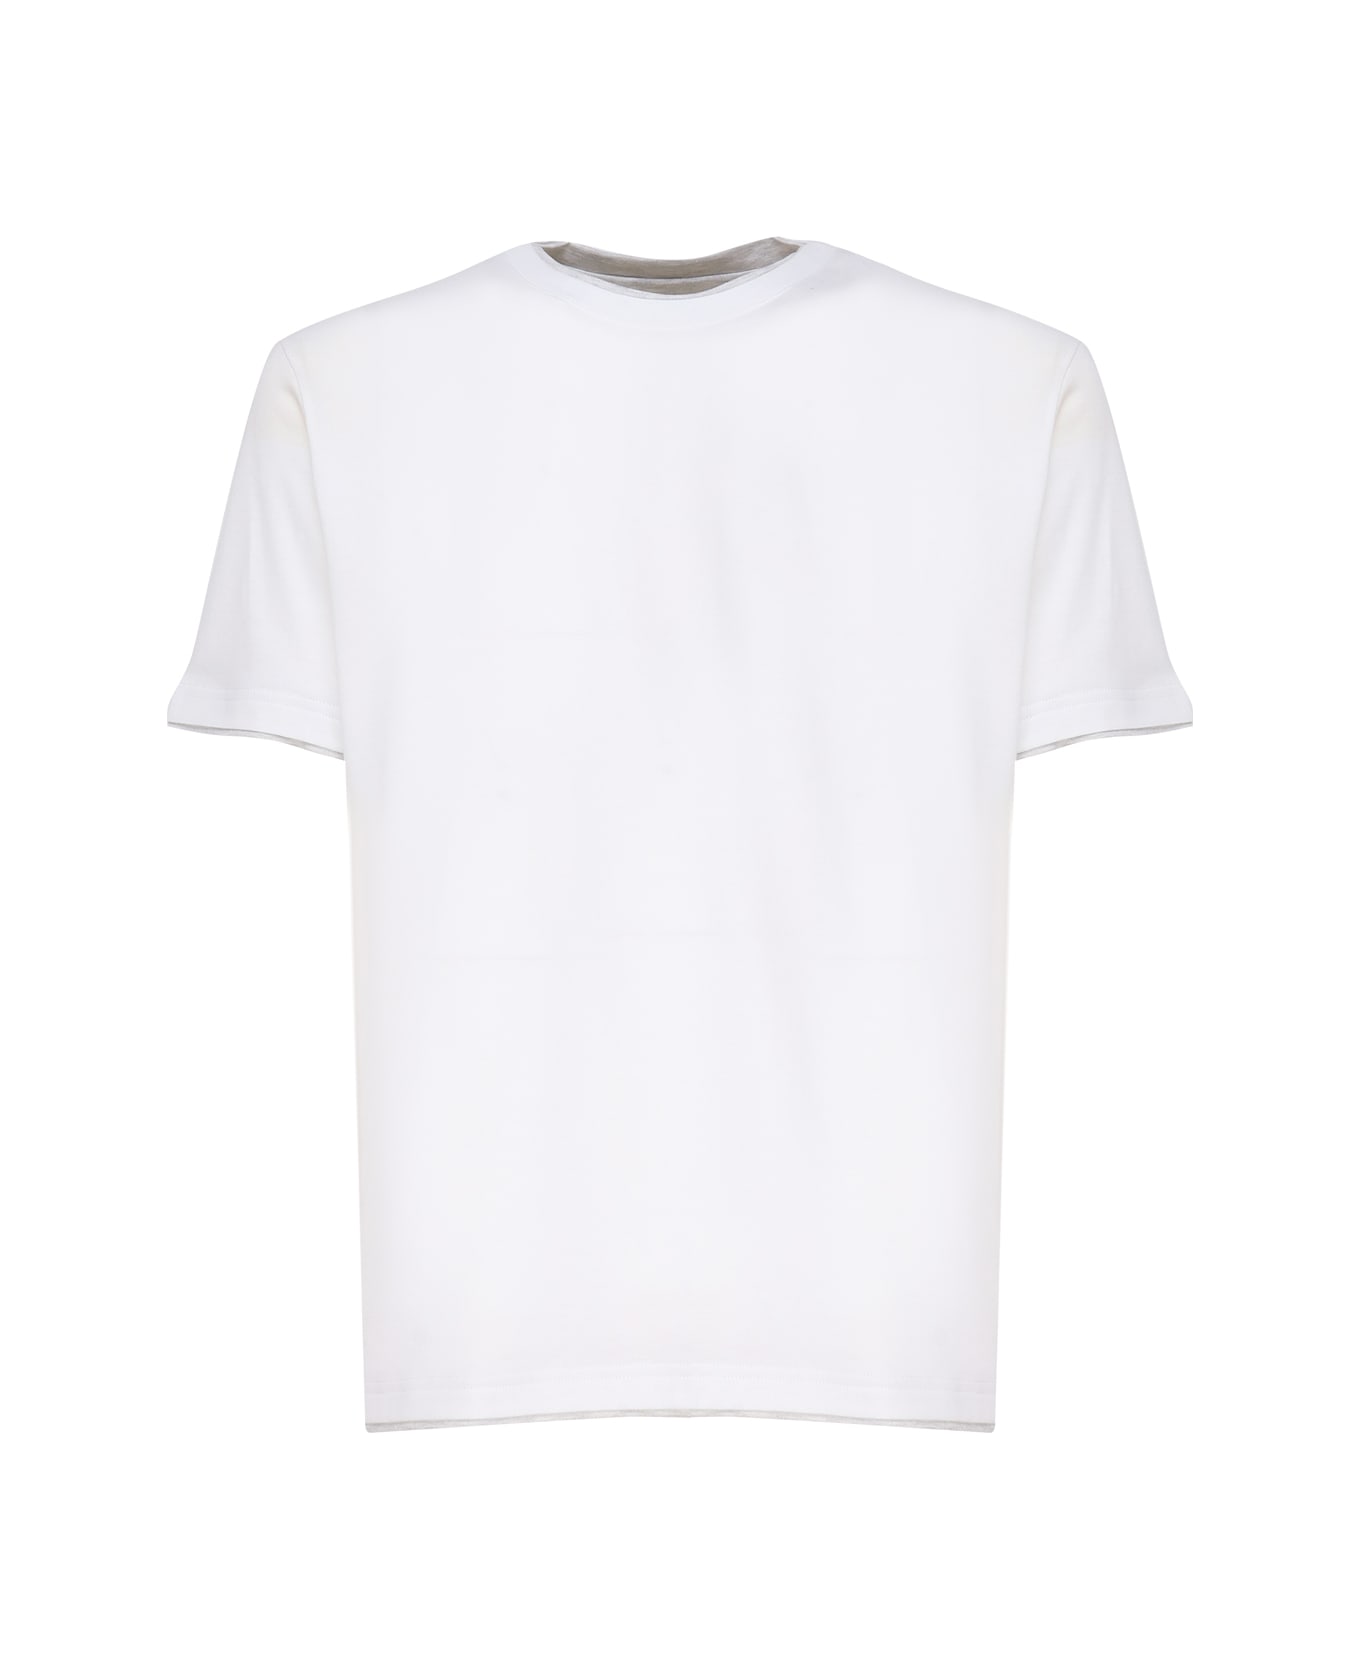 Eleventy Crew Neck T-shirt - White, Melange Lt. Gray